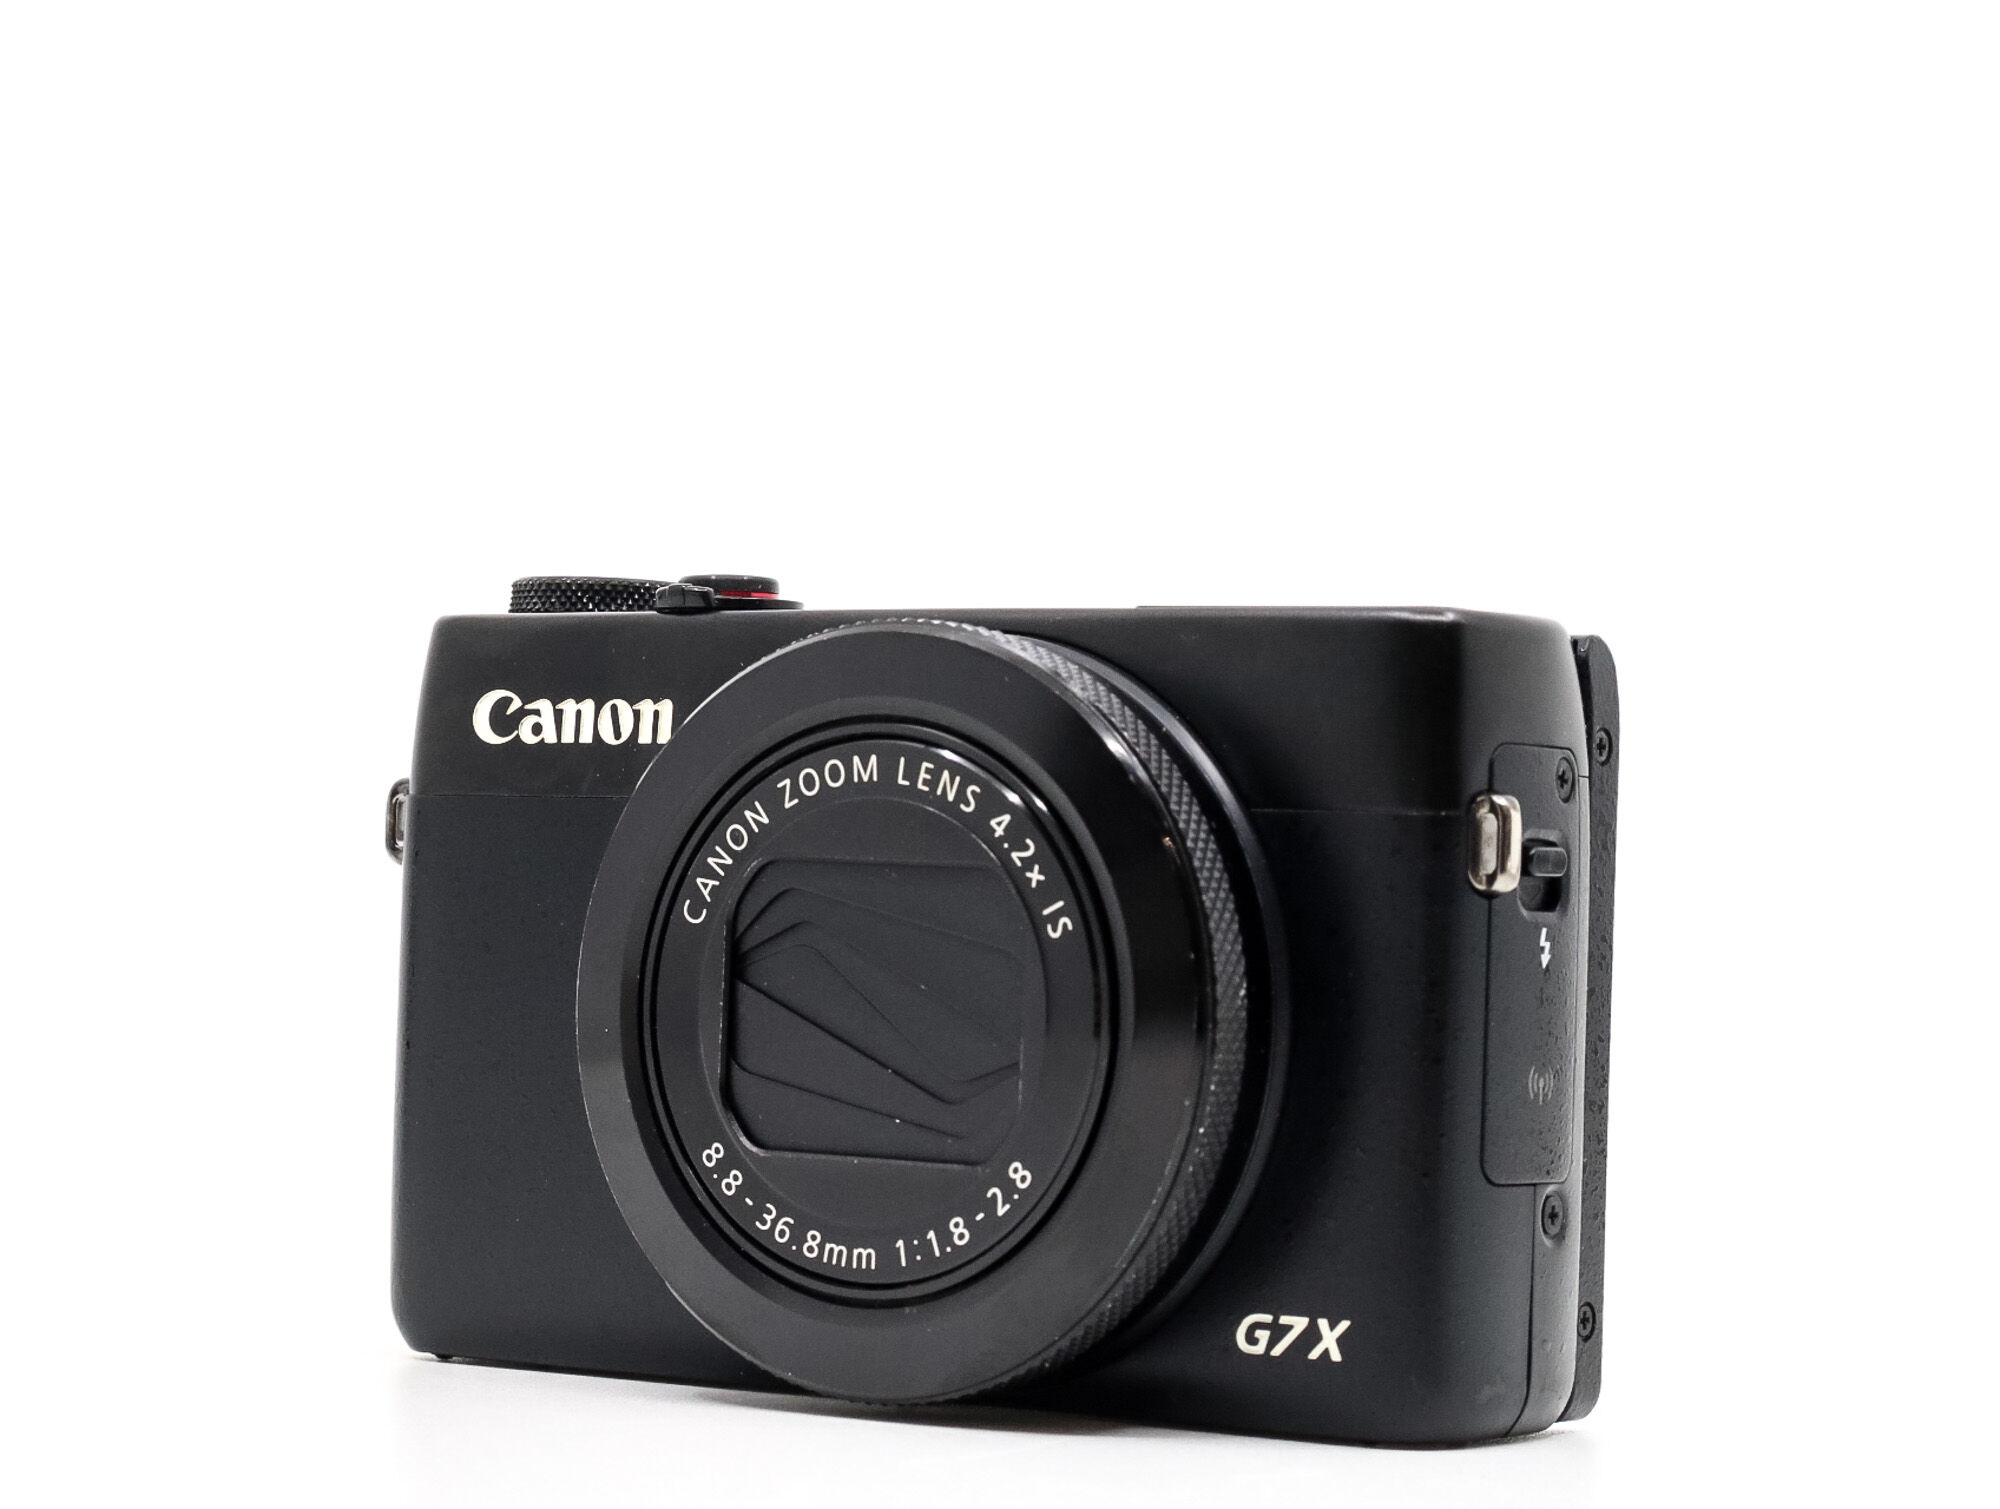 Canon PowerShot G7 X (Condition: Excellent)